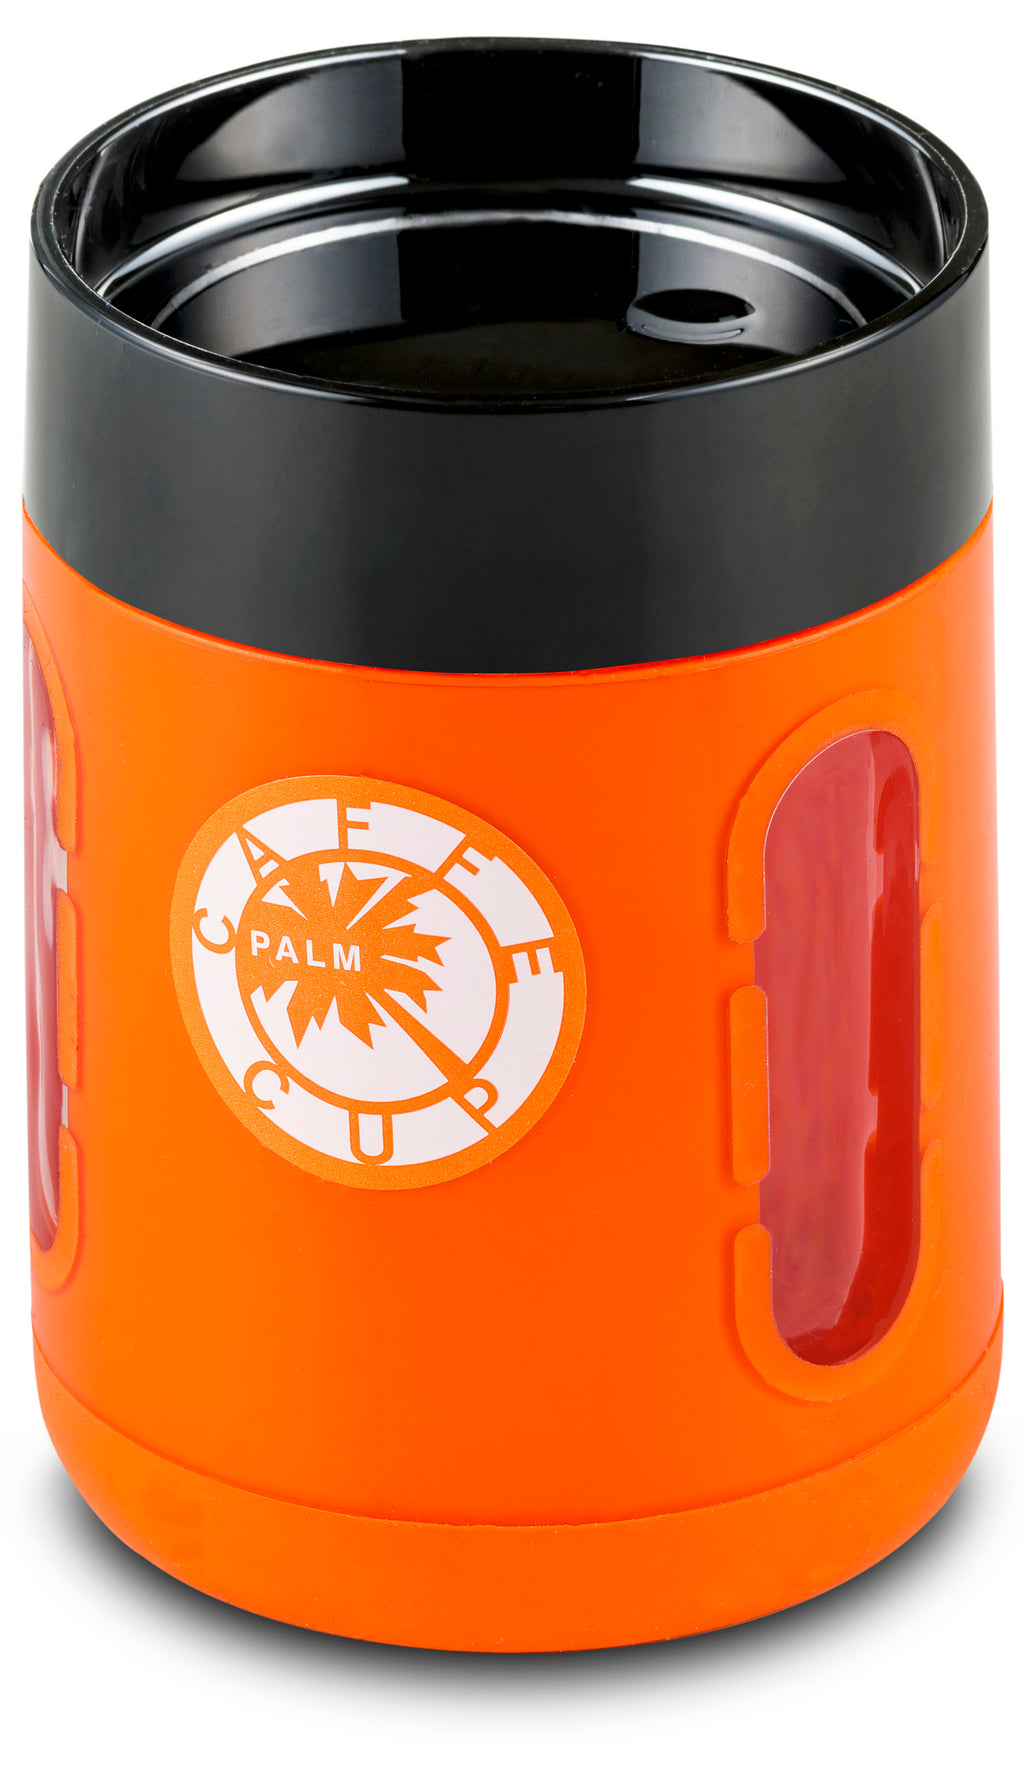 Palm Caffe Cup - Orange/Black